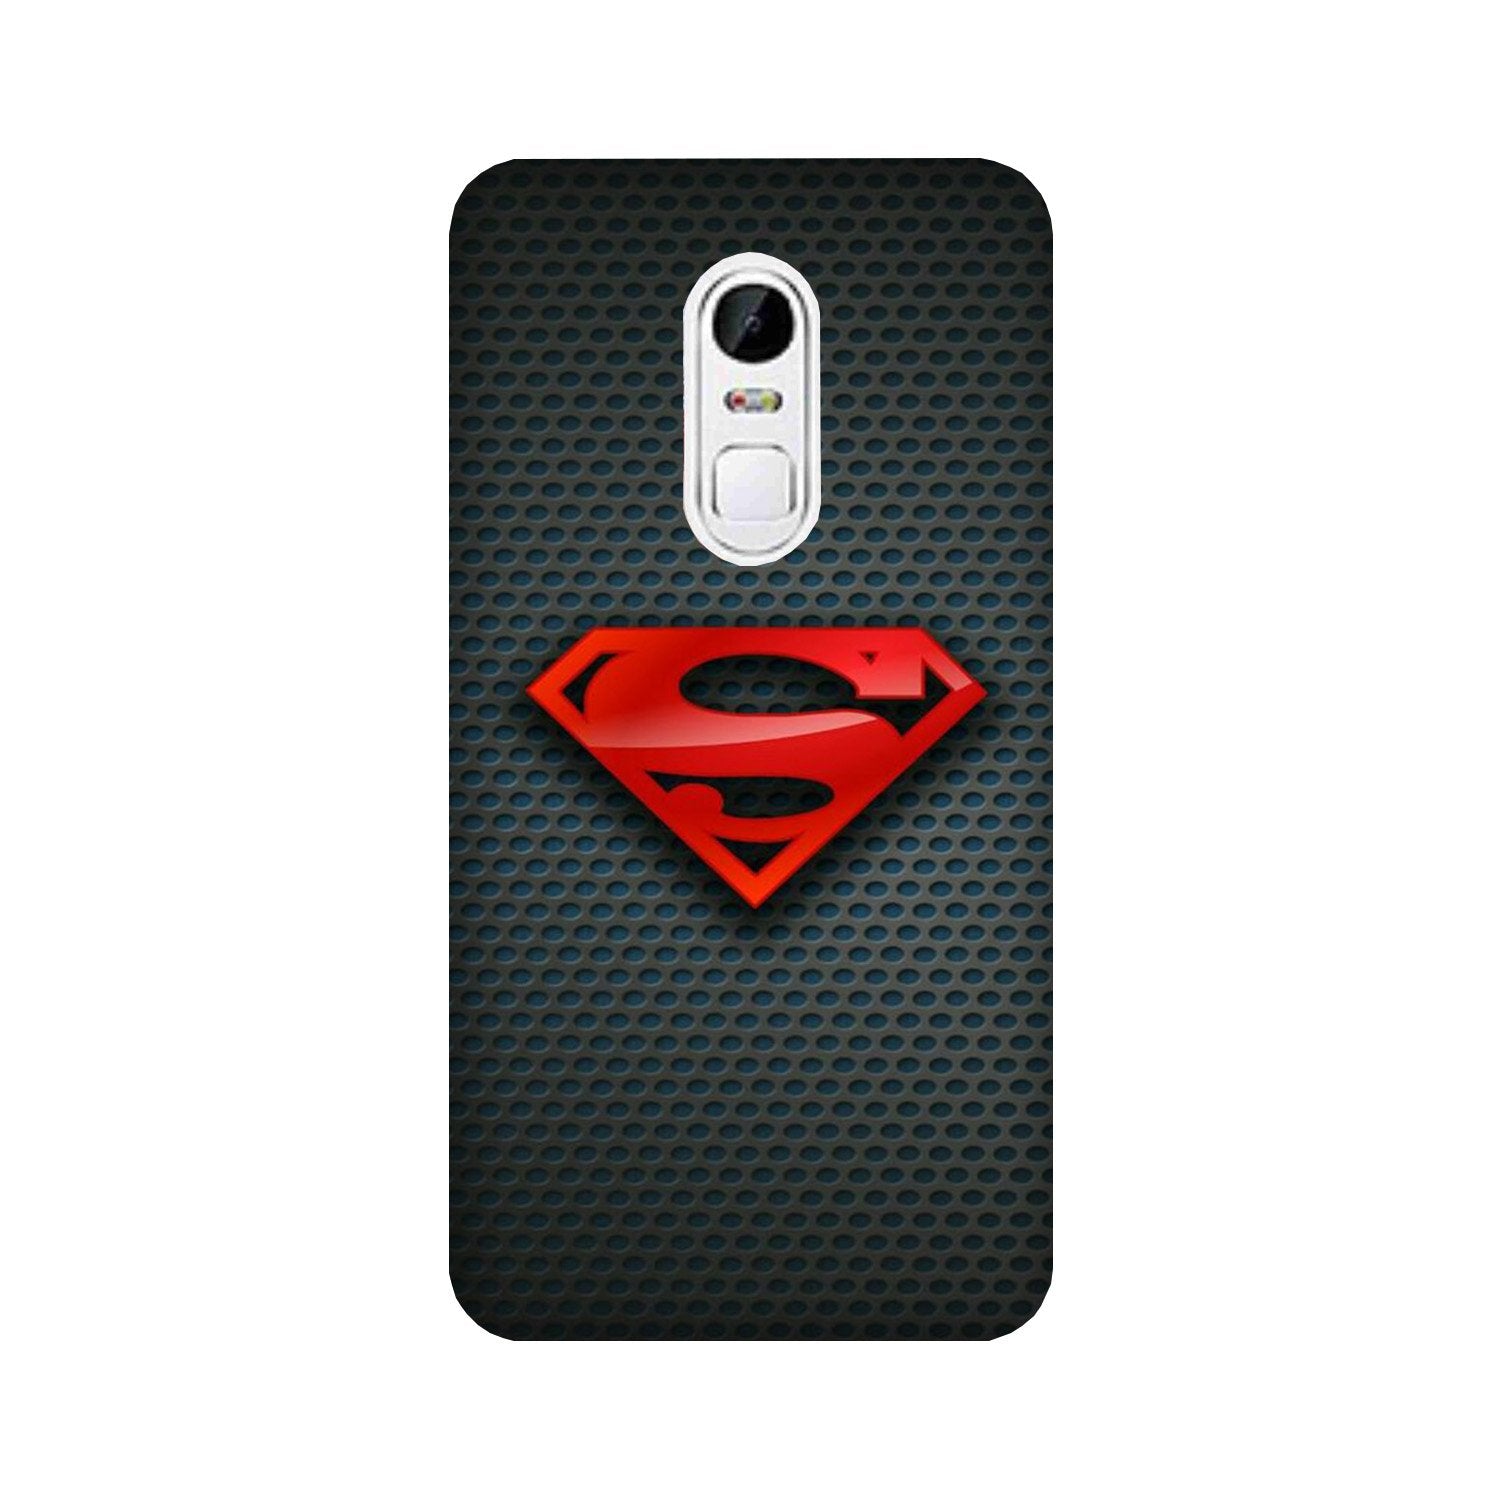 Superman Case for Lenovo Vibe X3 (Design No. 247)